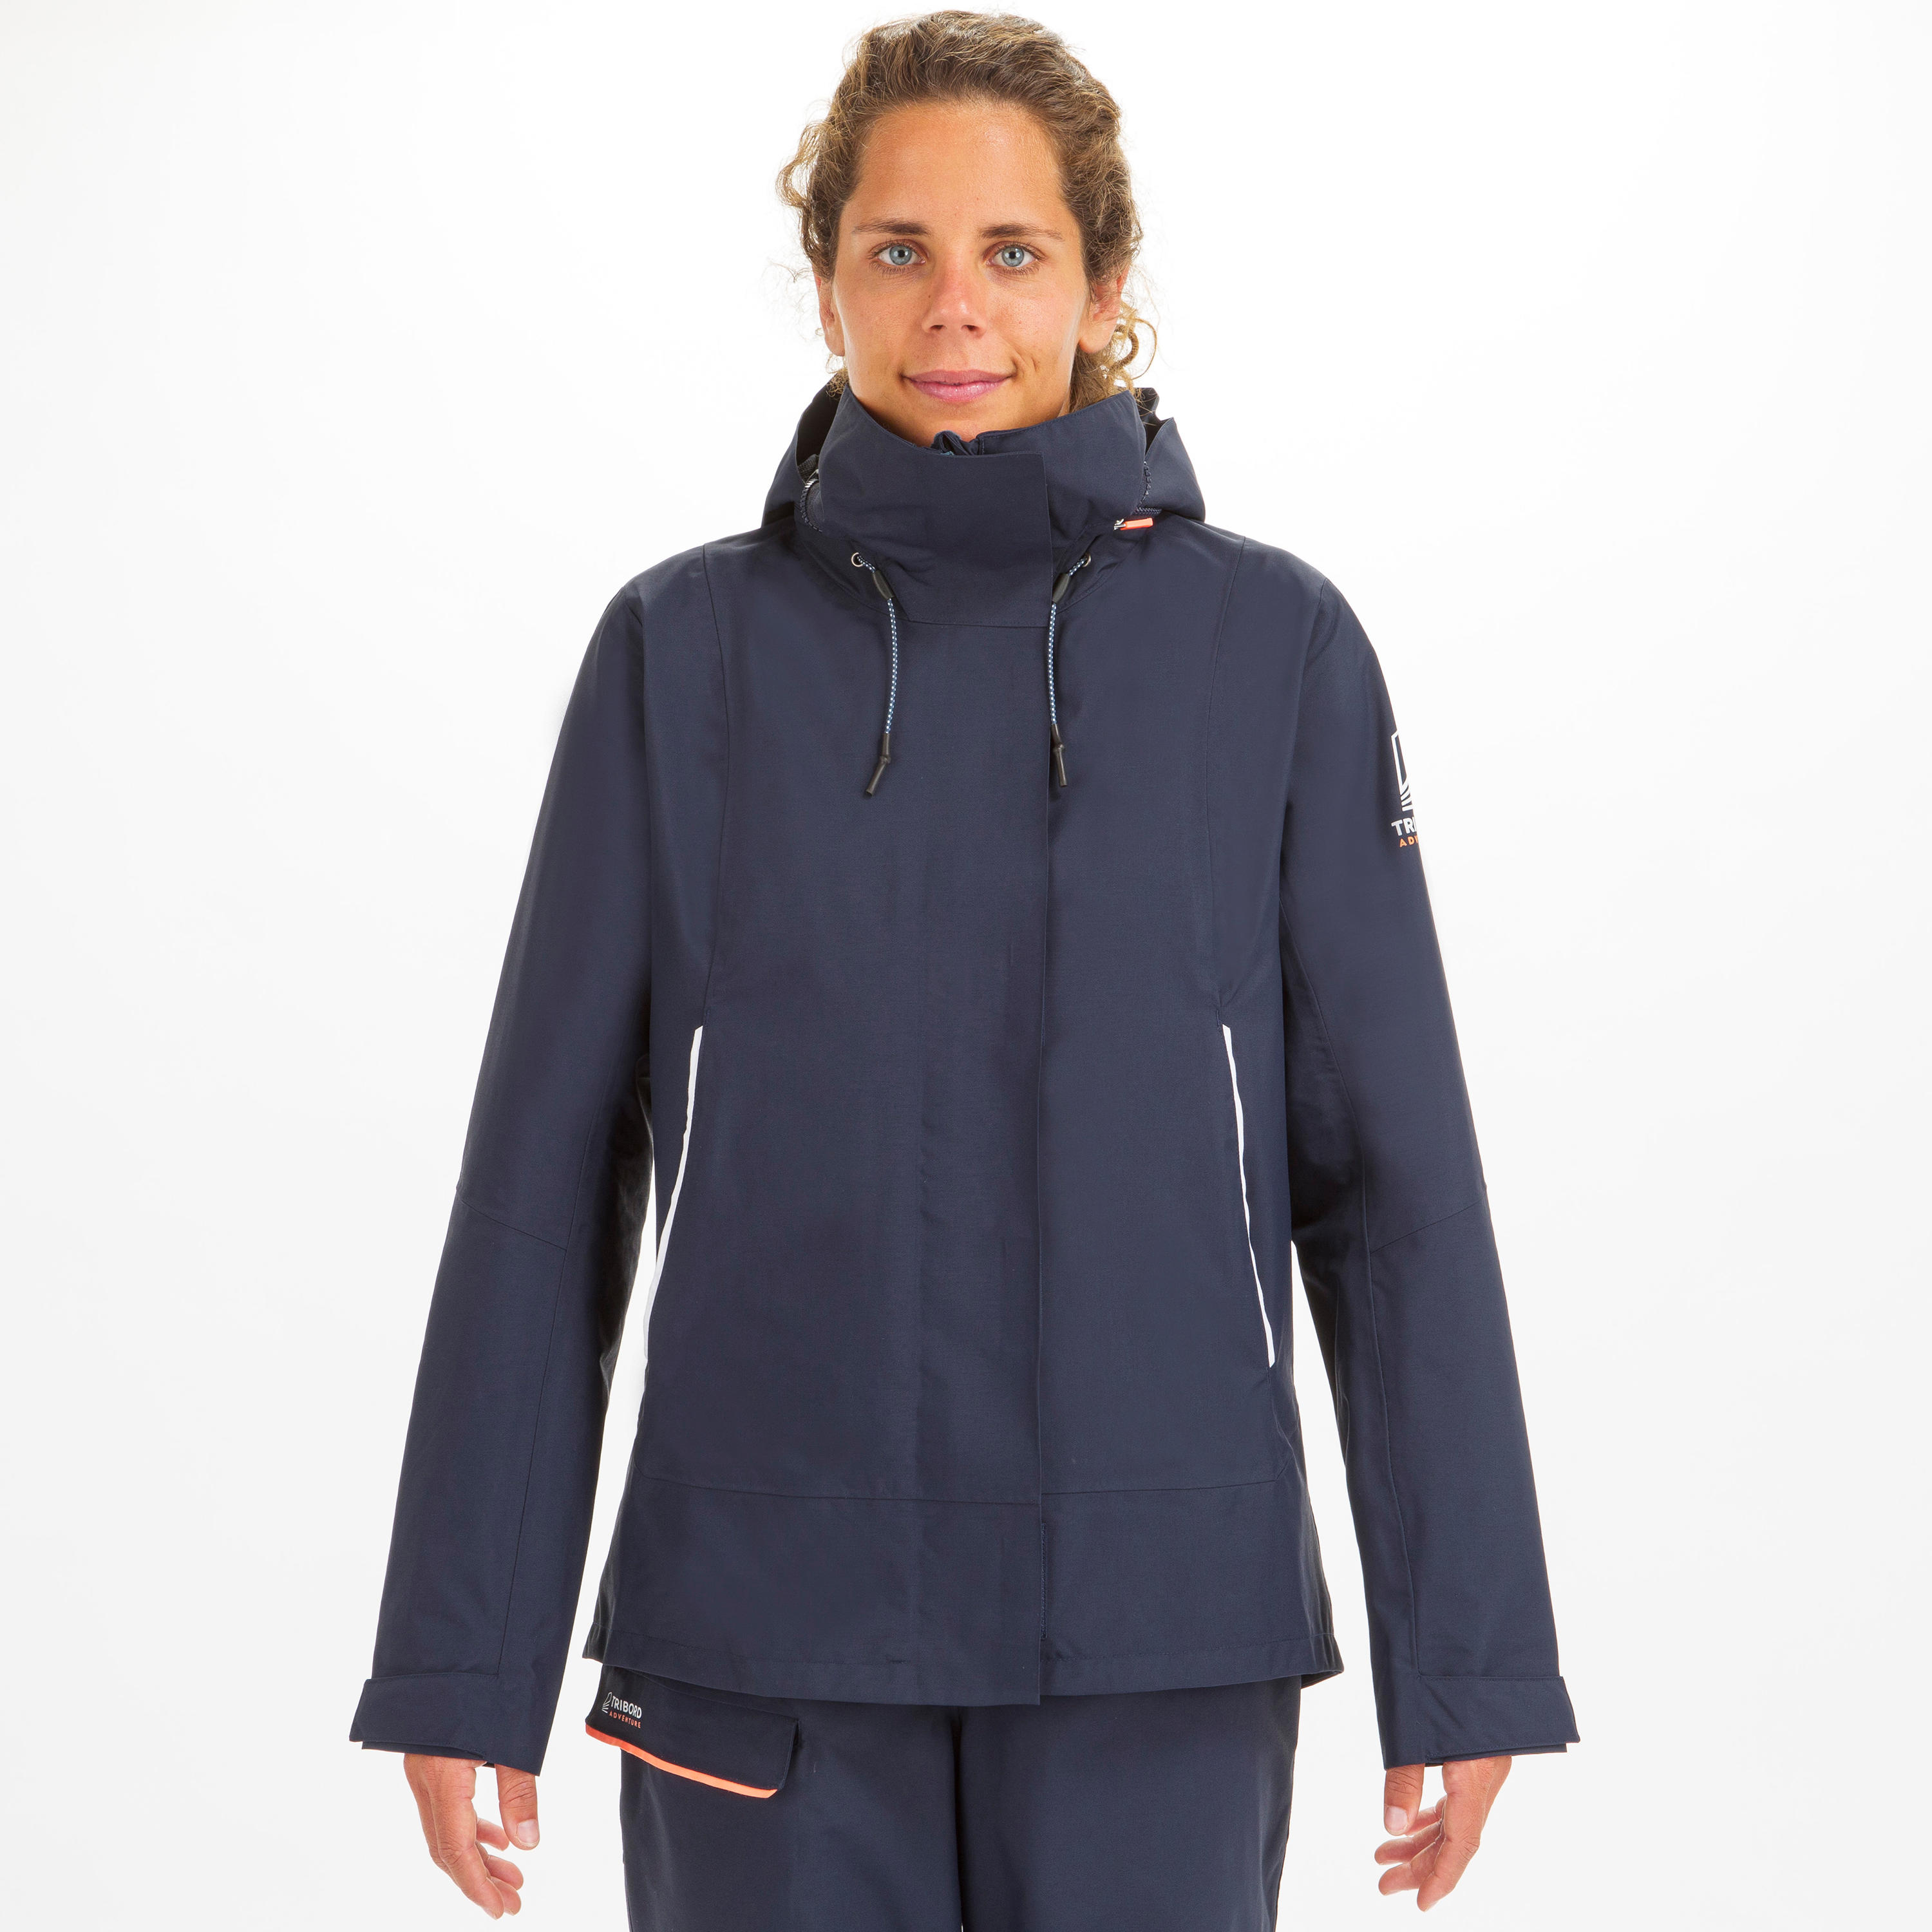 Women's Waterproof Wind-proof Rain Jacket SAILING 300 navy 1/7